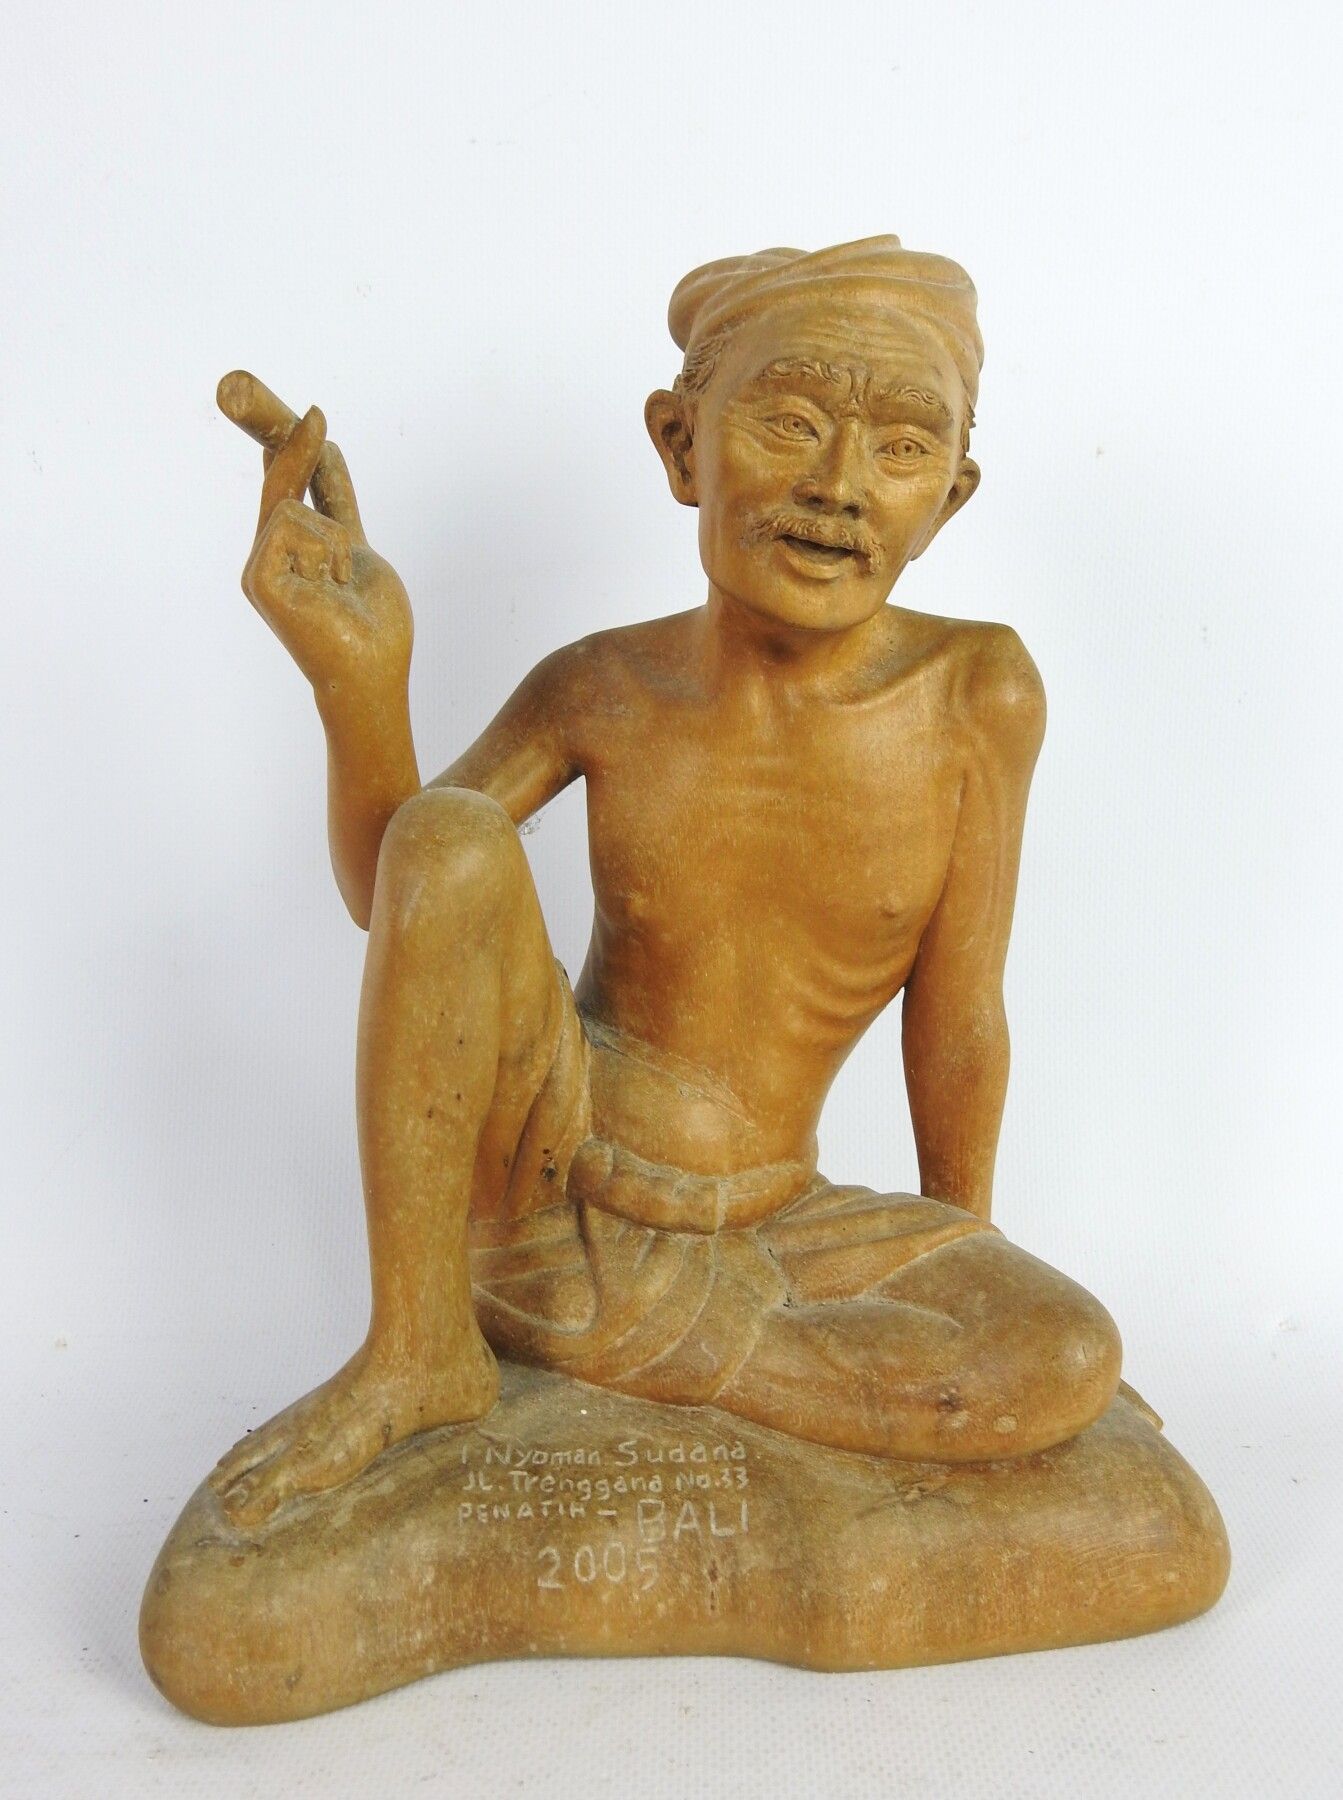 Null 印度：抽鸦片的人坐在一个底座上，右膝抬起。抛光的木材。签名：I Nyoman Sudana, Jl, Trenggana 33, Bali.2005。&hellip;